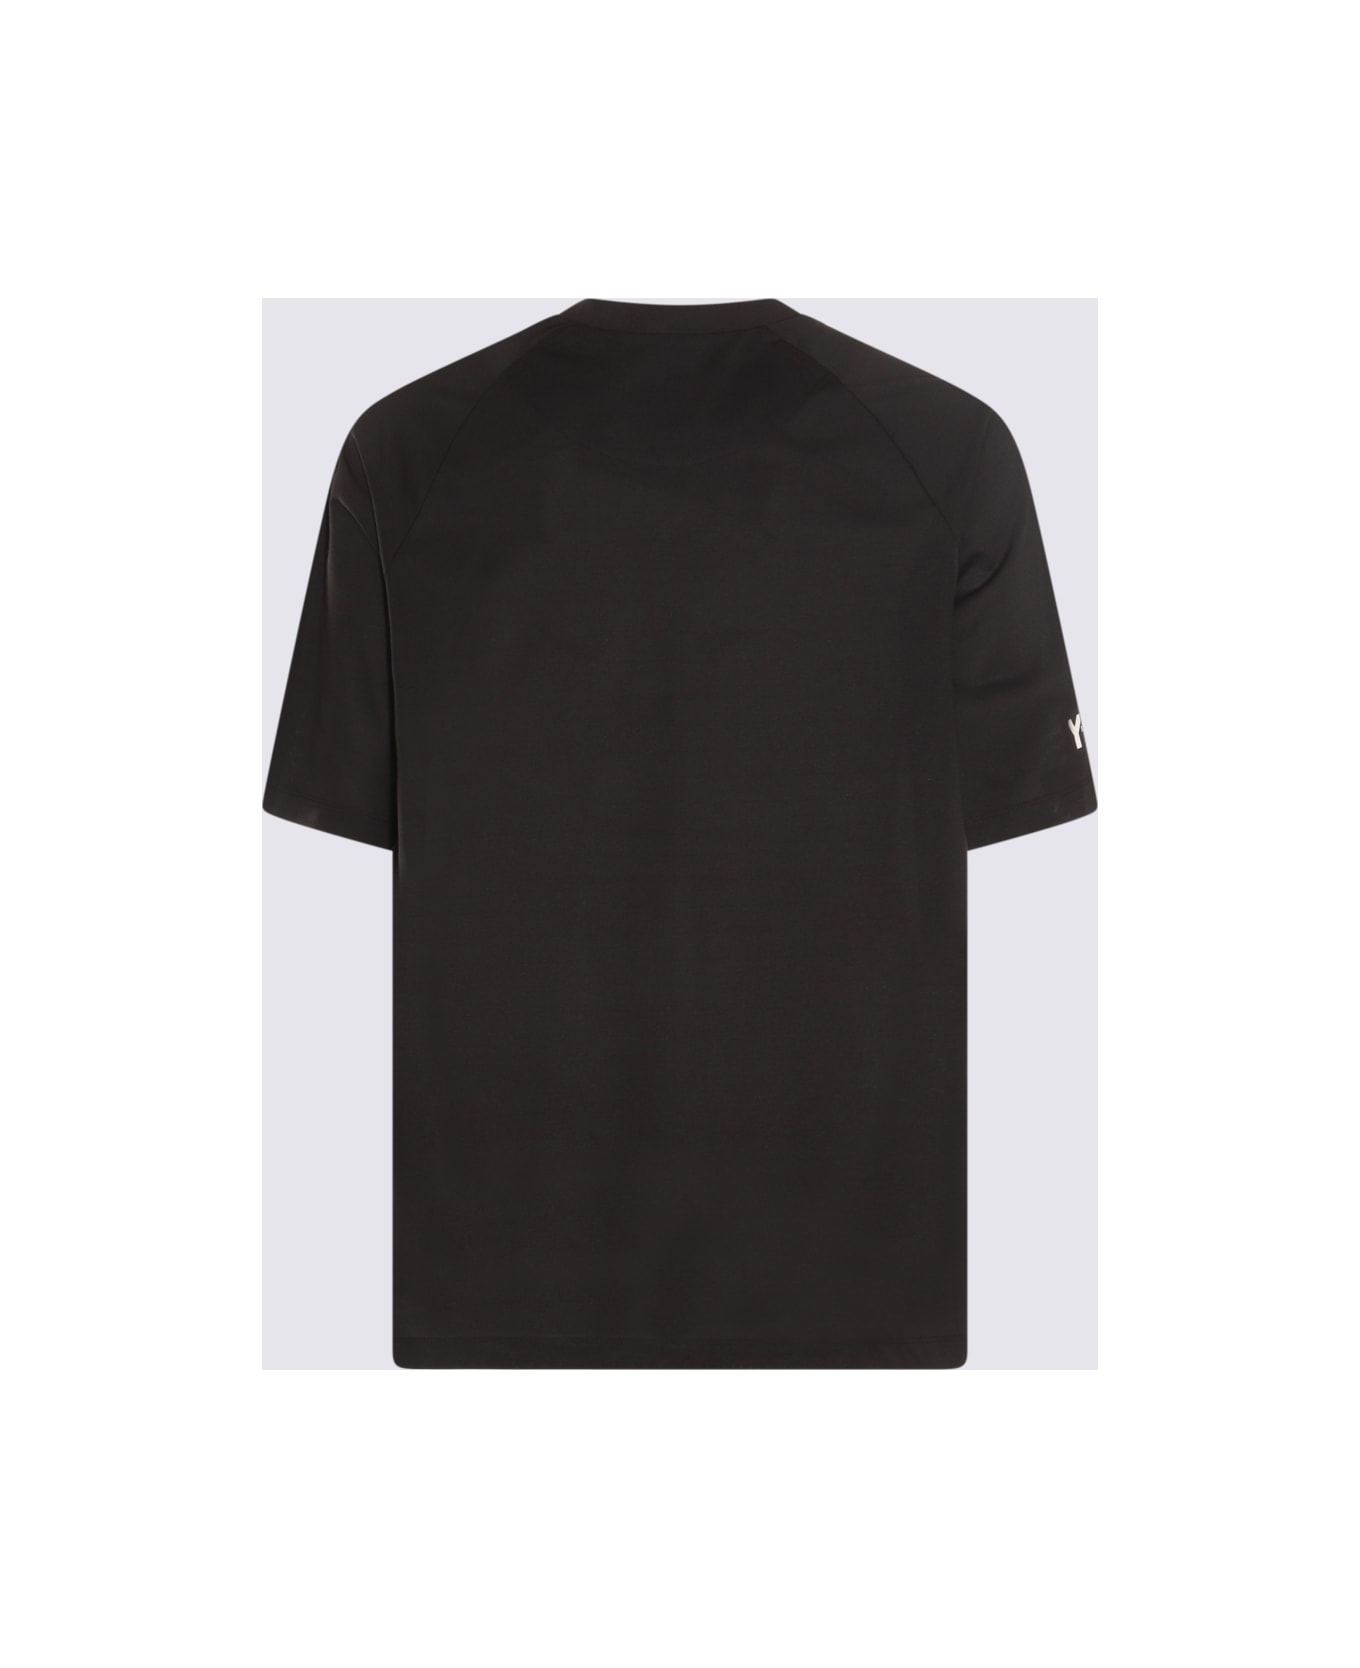 Y-3 Black And Grey Cotton T-shirt - Black Tシャツ